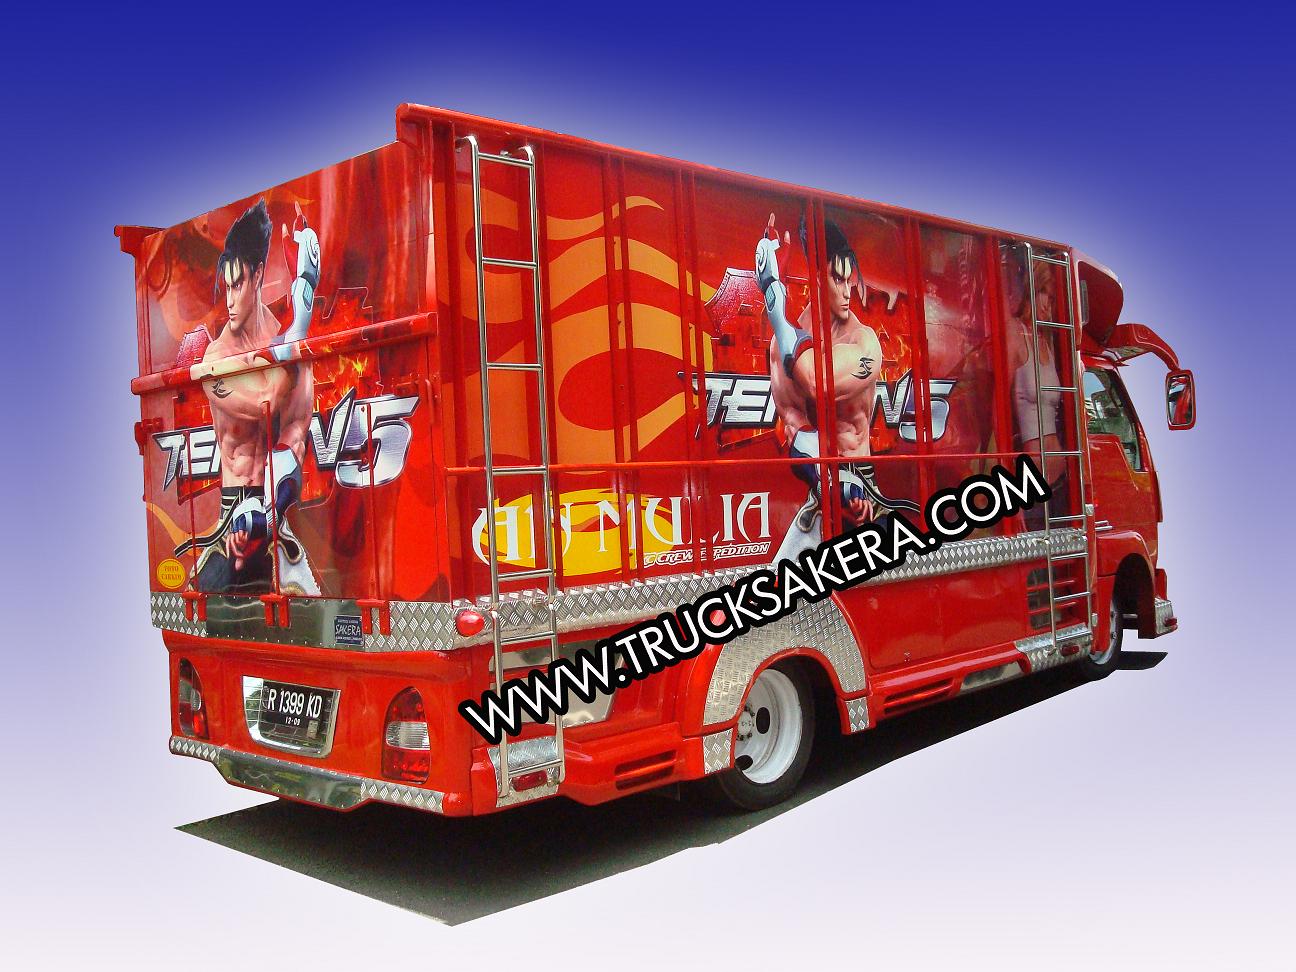 Truck XPDC Keren truck sakera